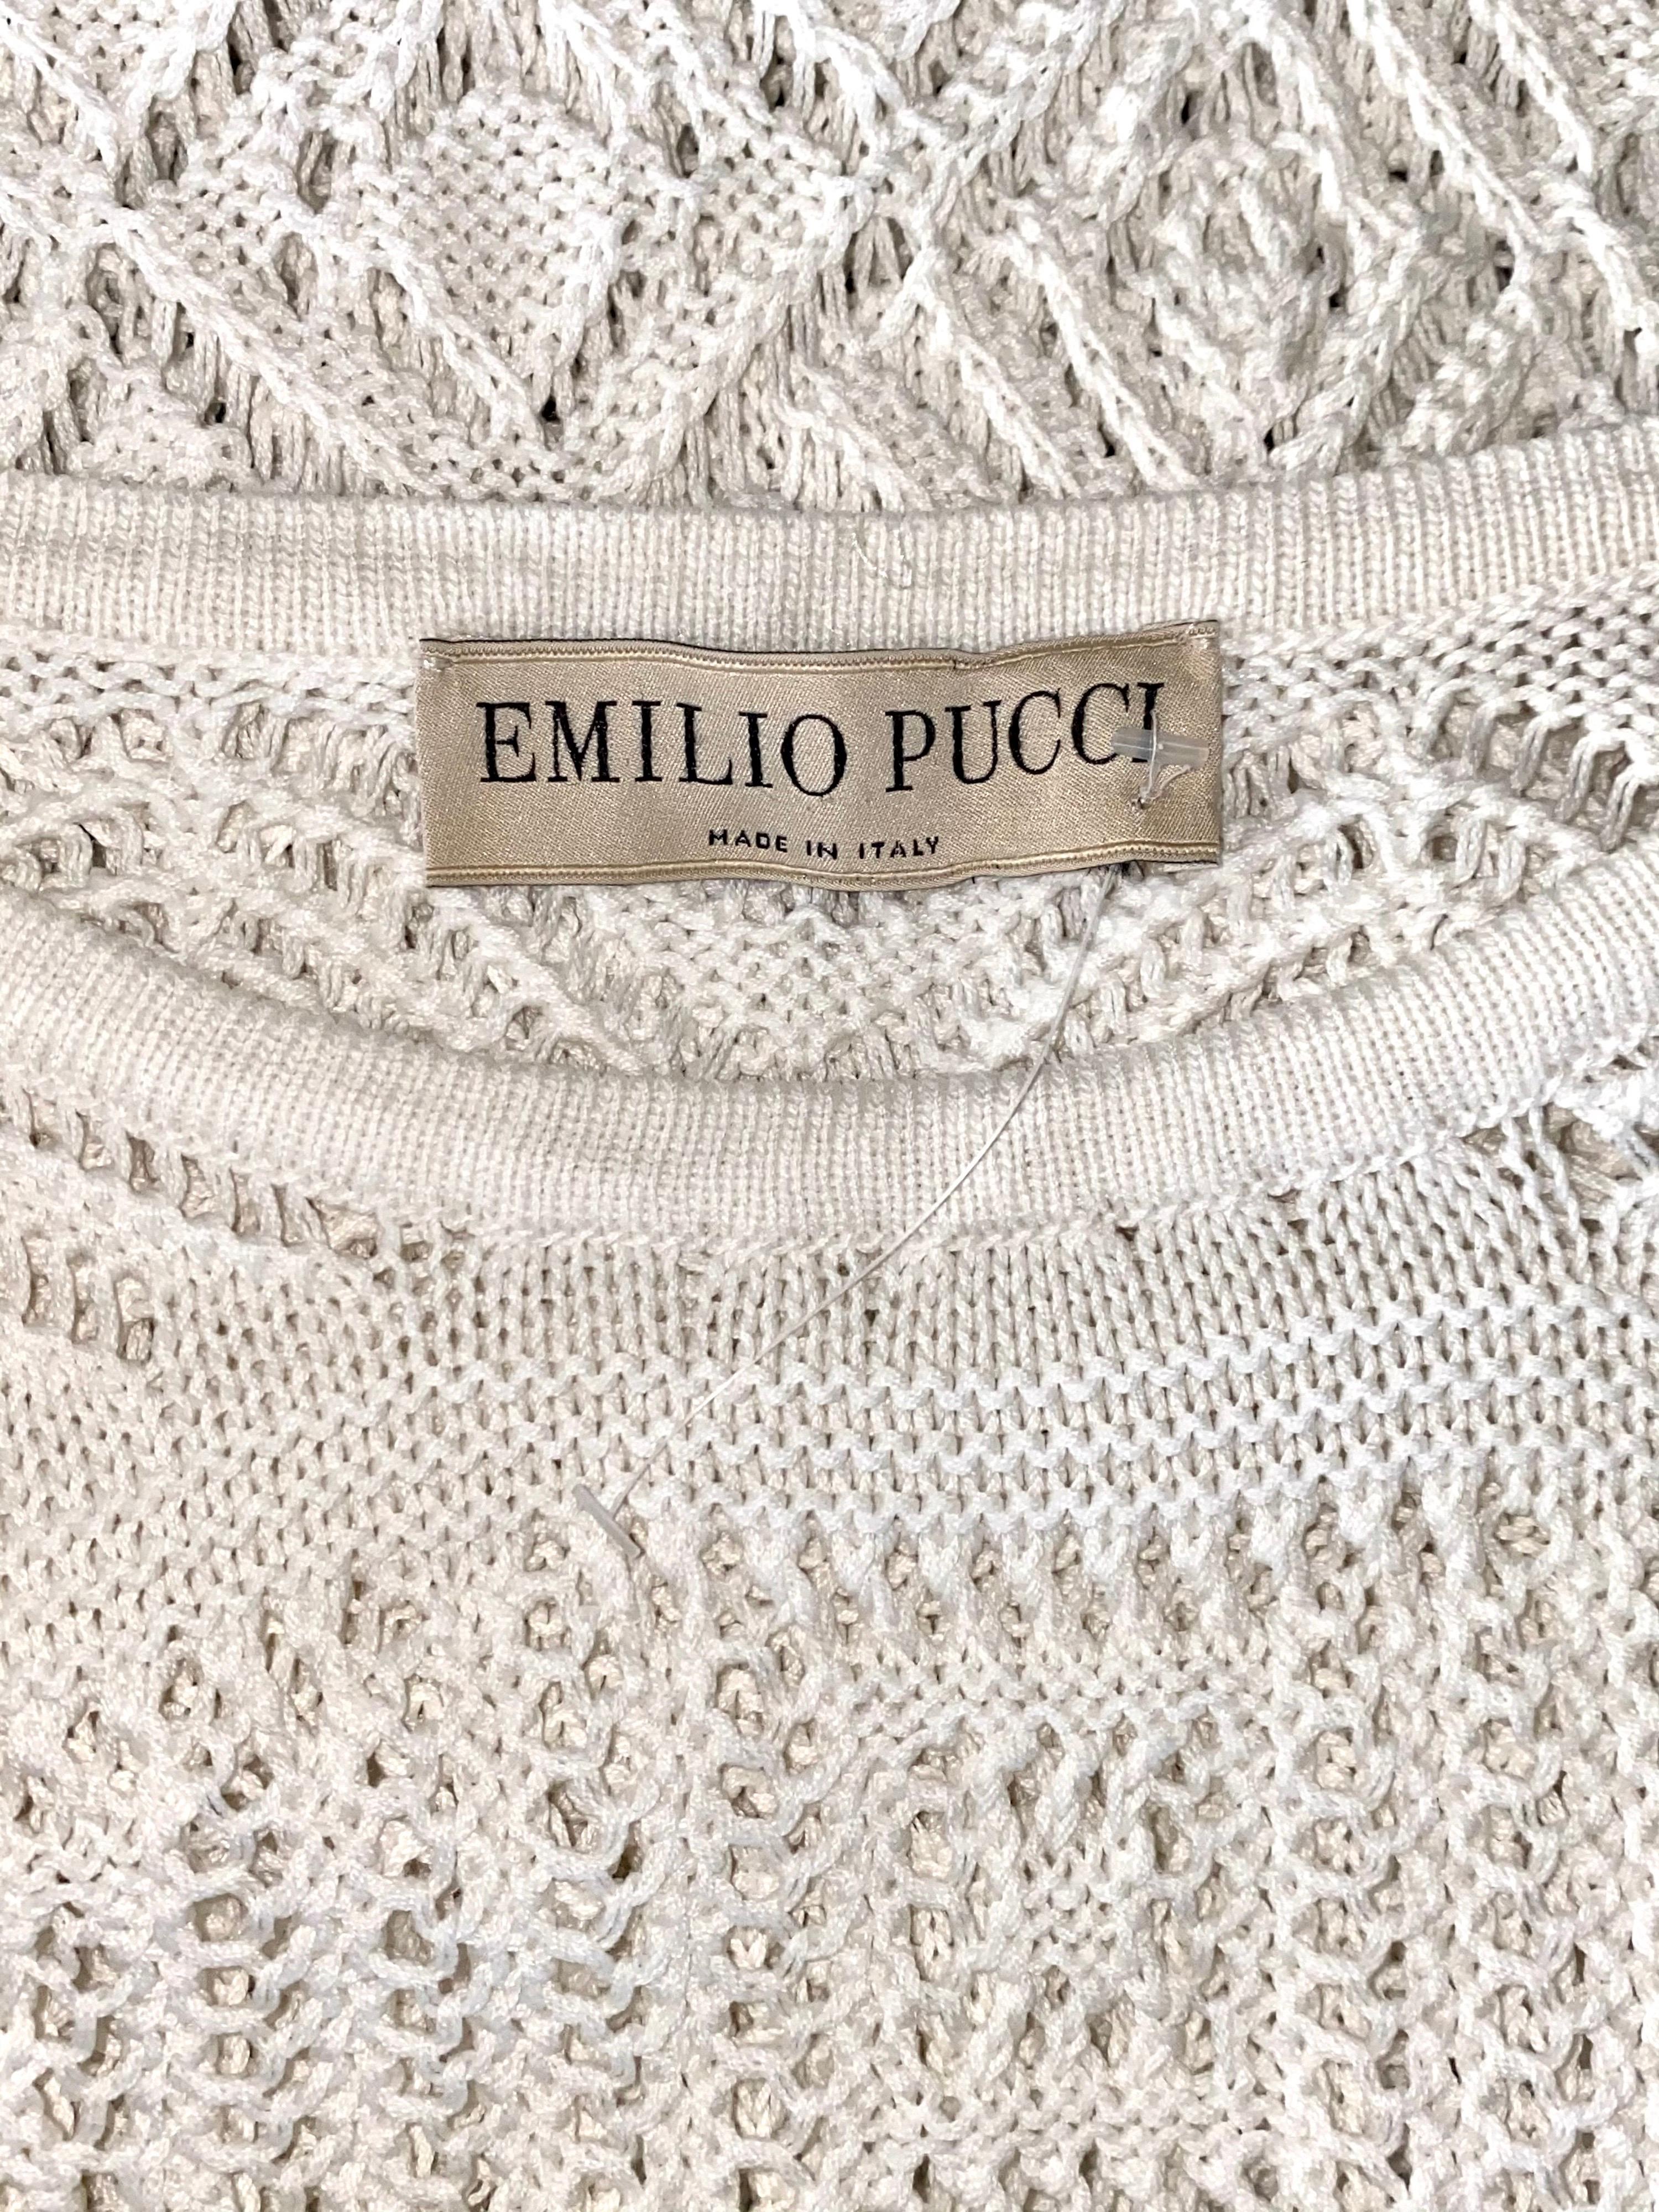 Stunning Emilio Pucci Crochet Knit Mini Dress Engagement Wedding 1